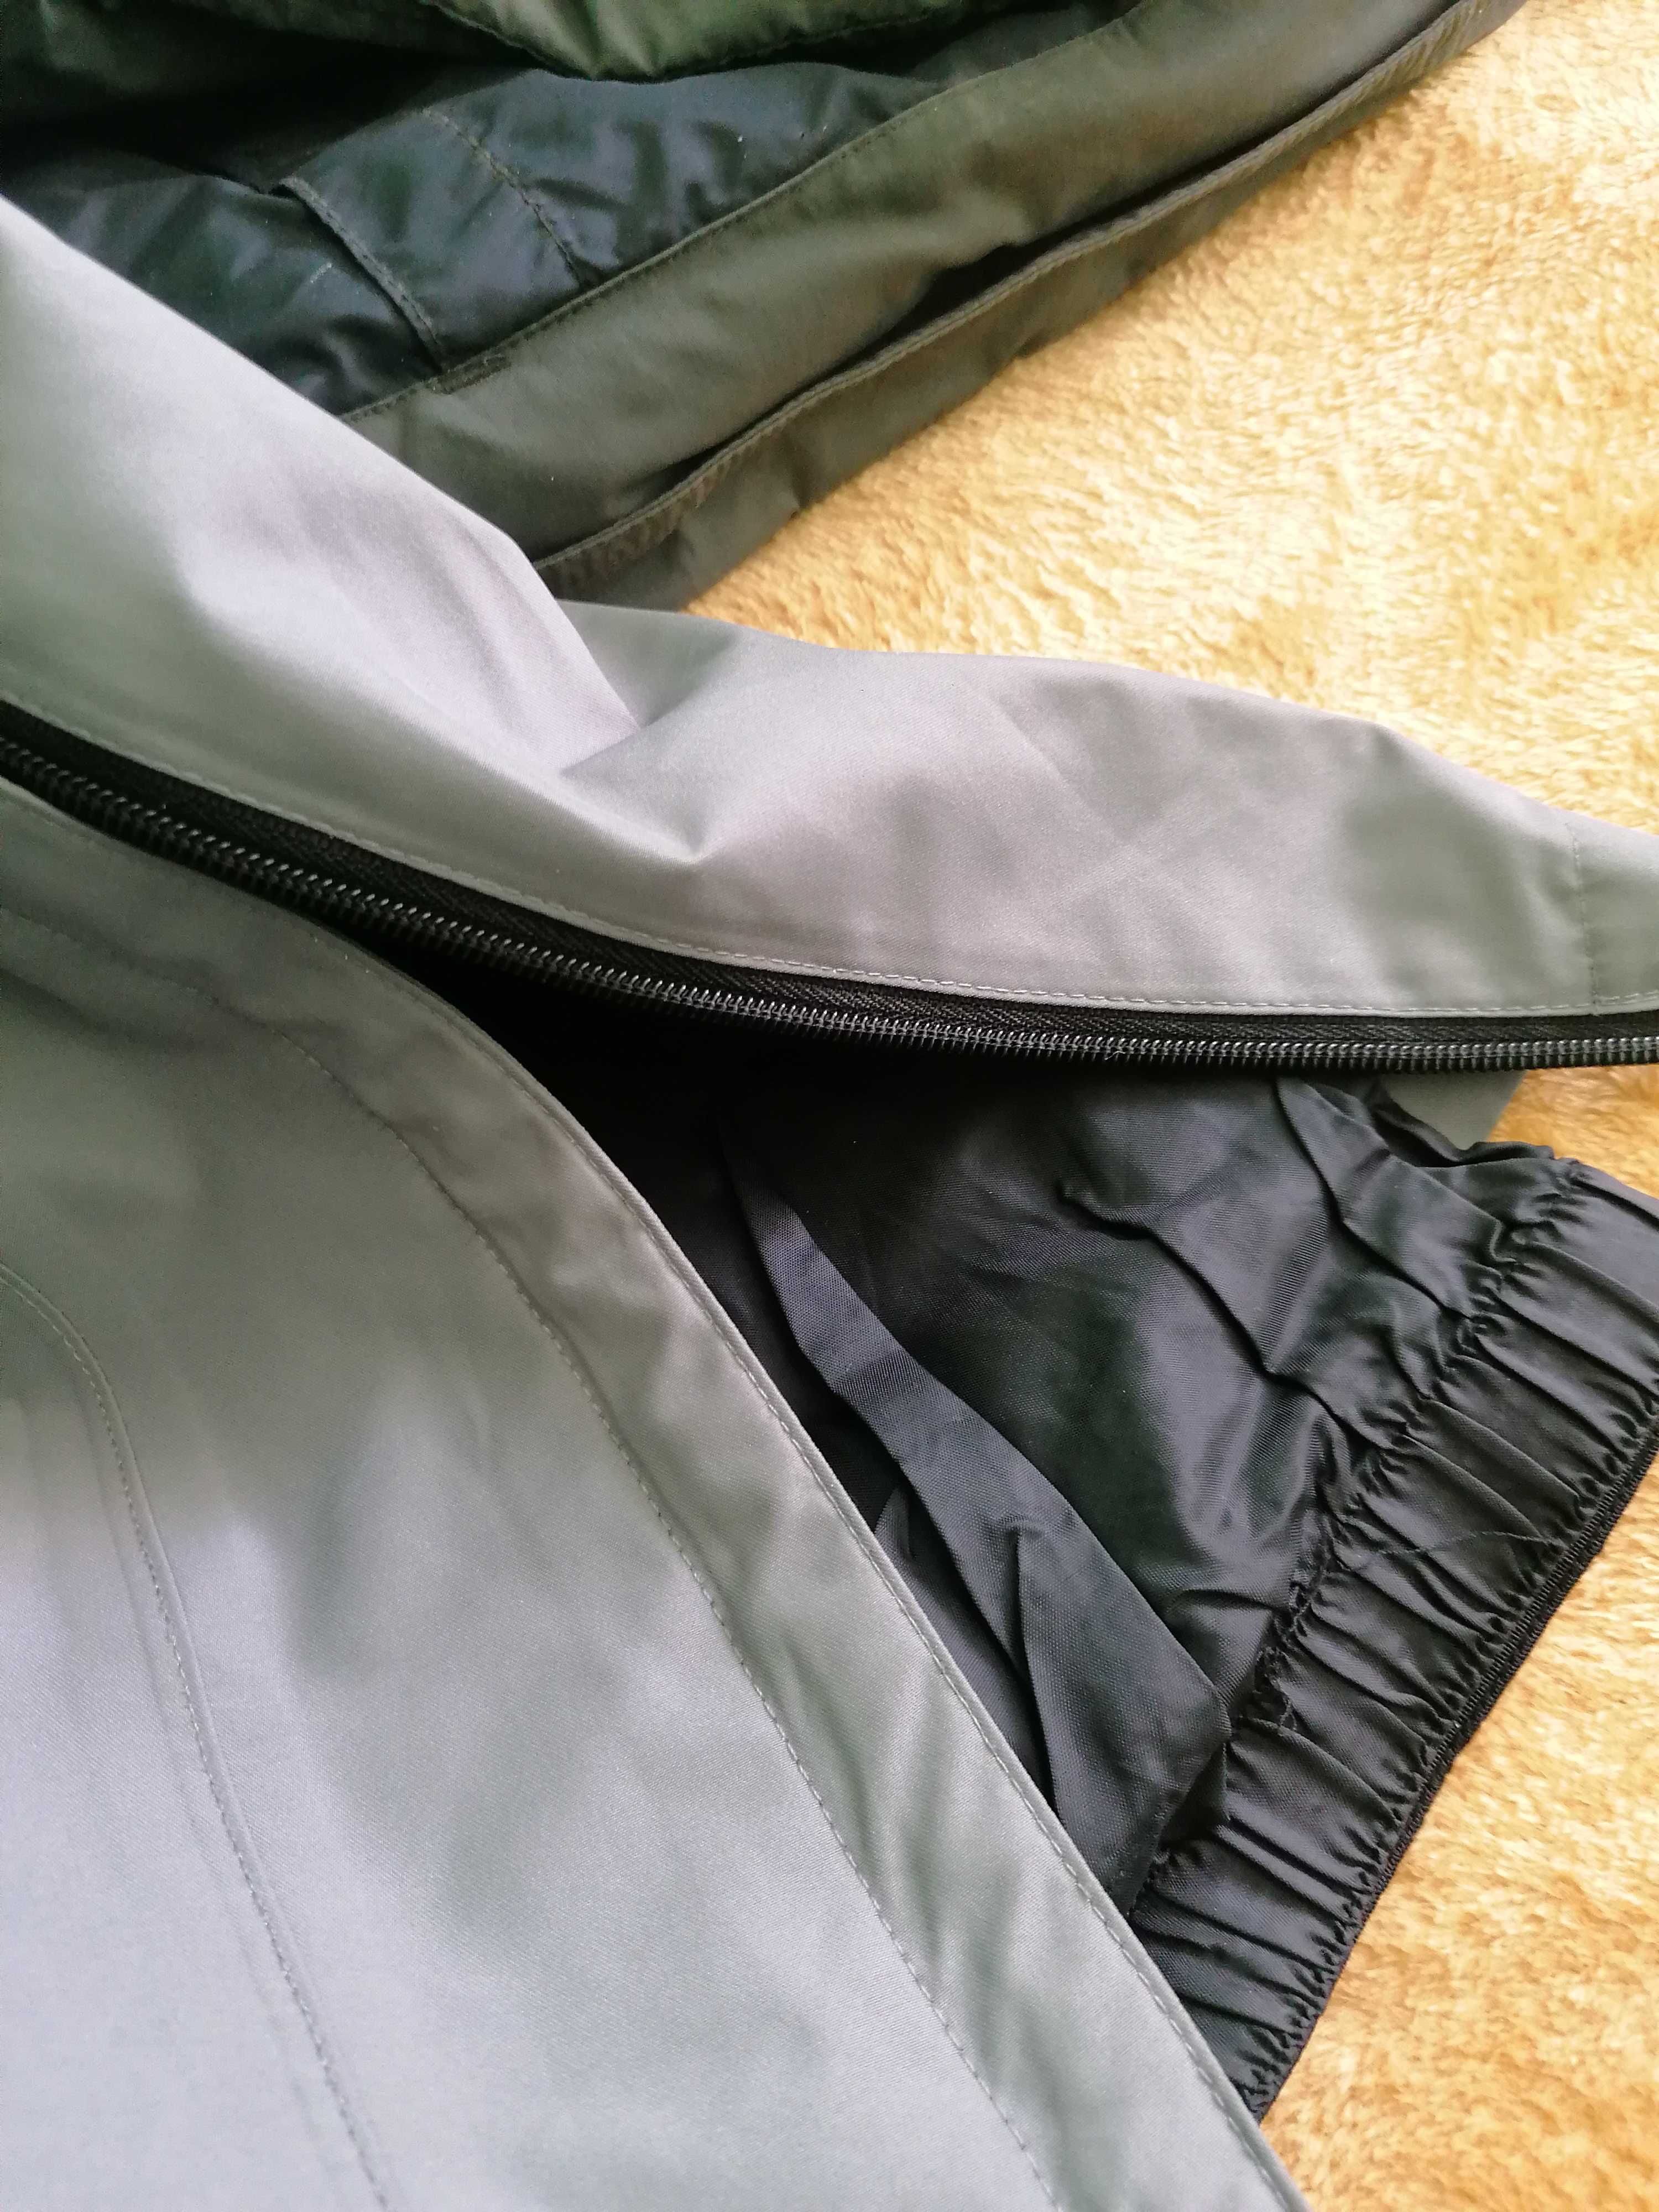 SWITSHER-грейка панталон за ски,нова,L размер,Columbia-M